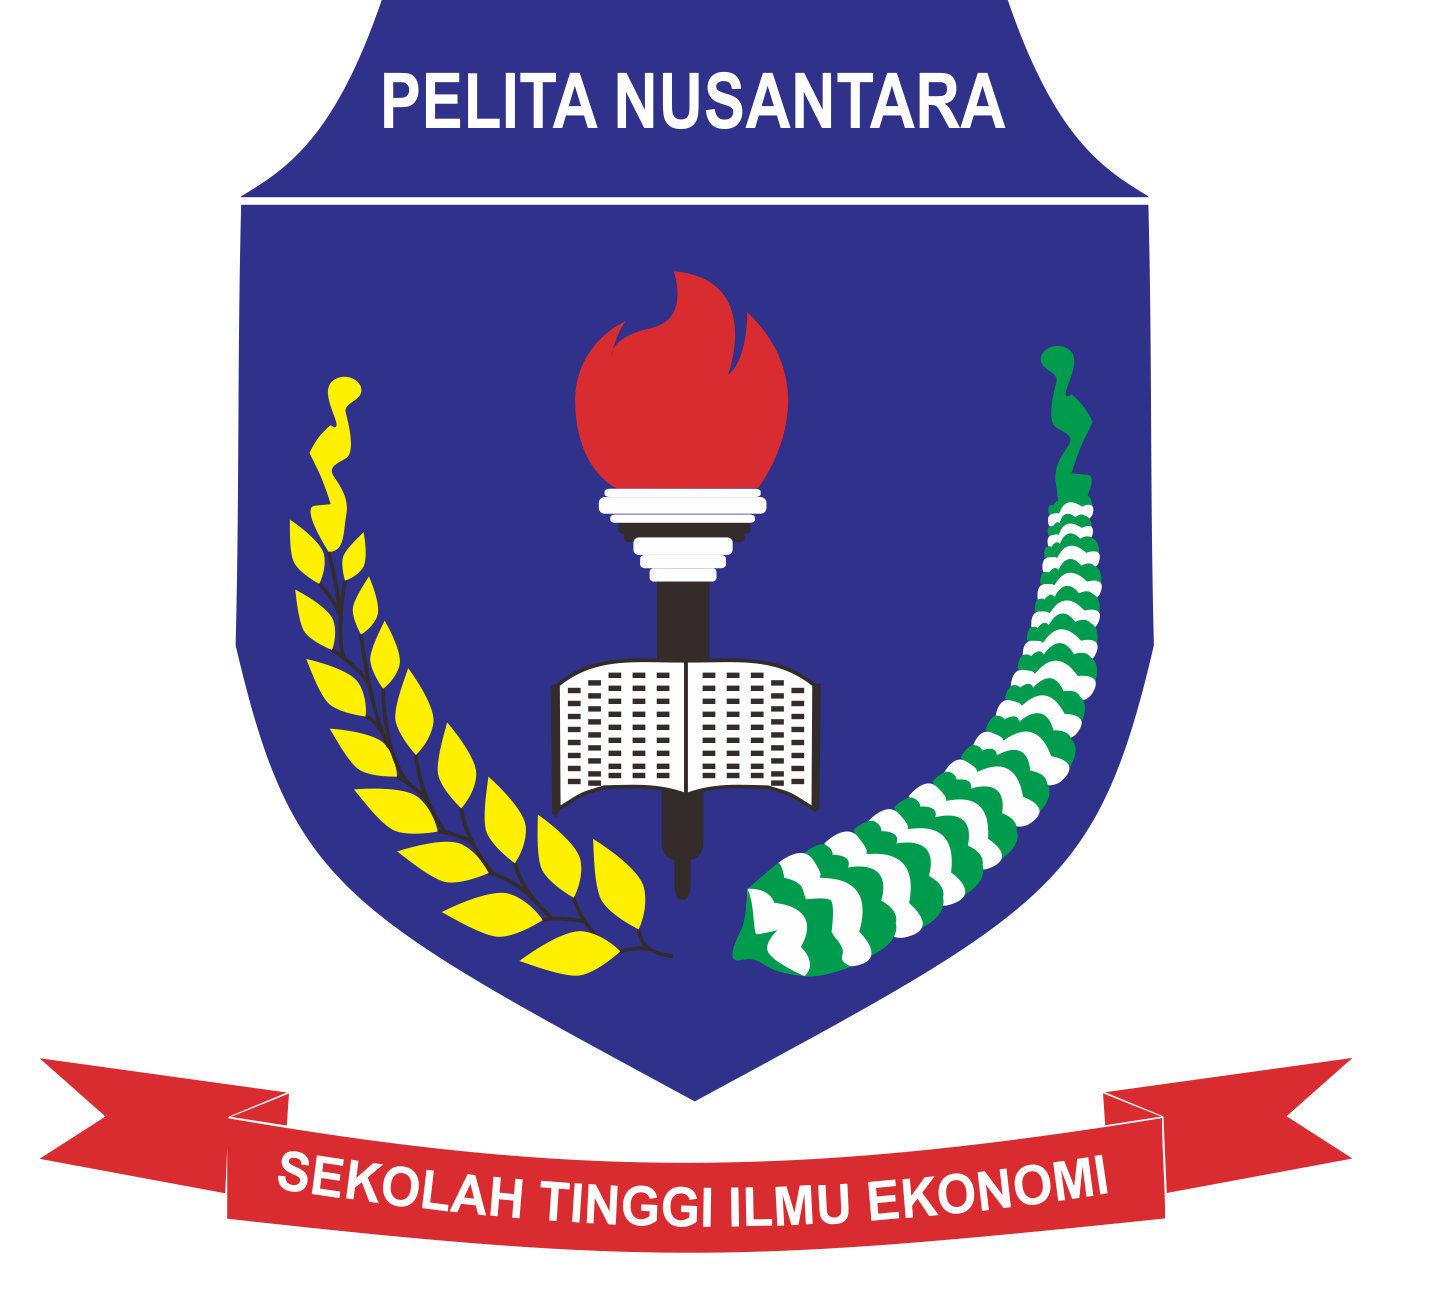 Sekolah Tinggi Ilmu Ekonomi Pelita Nusantara